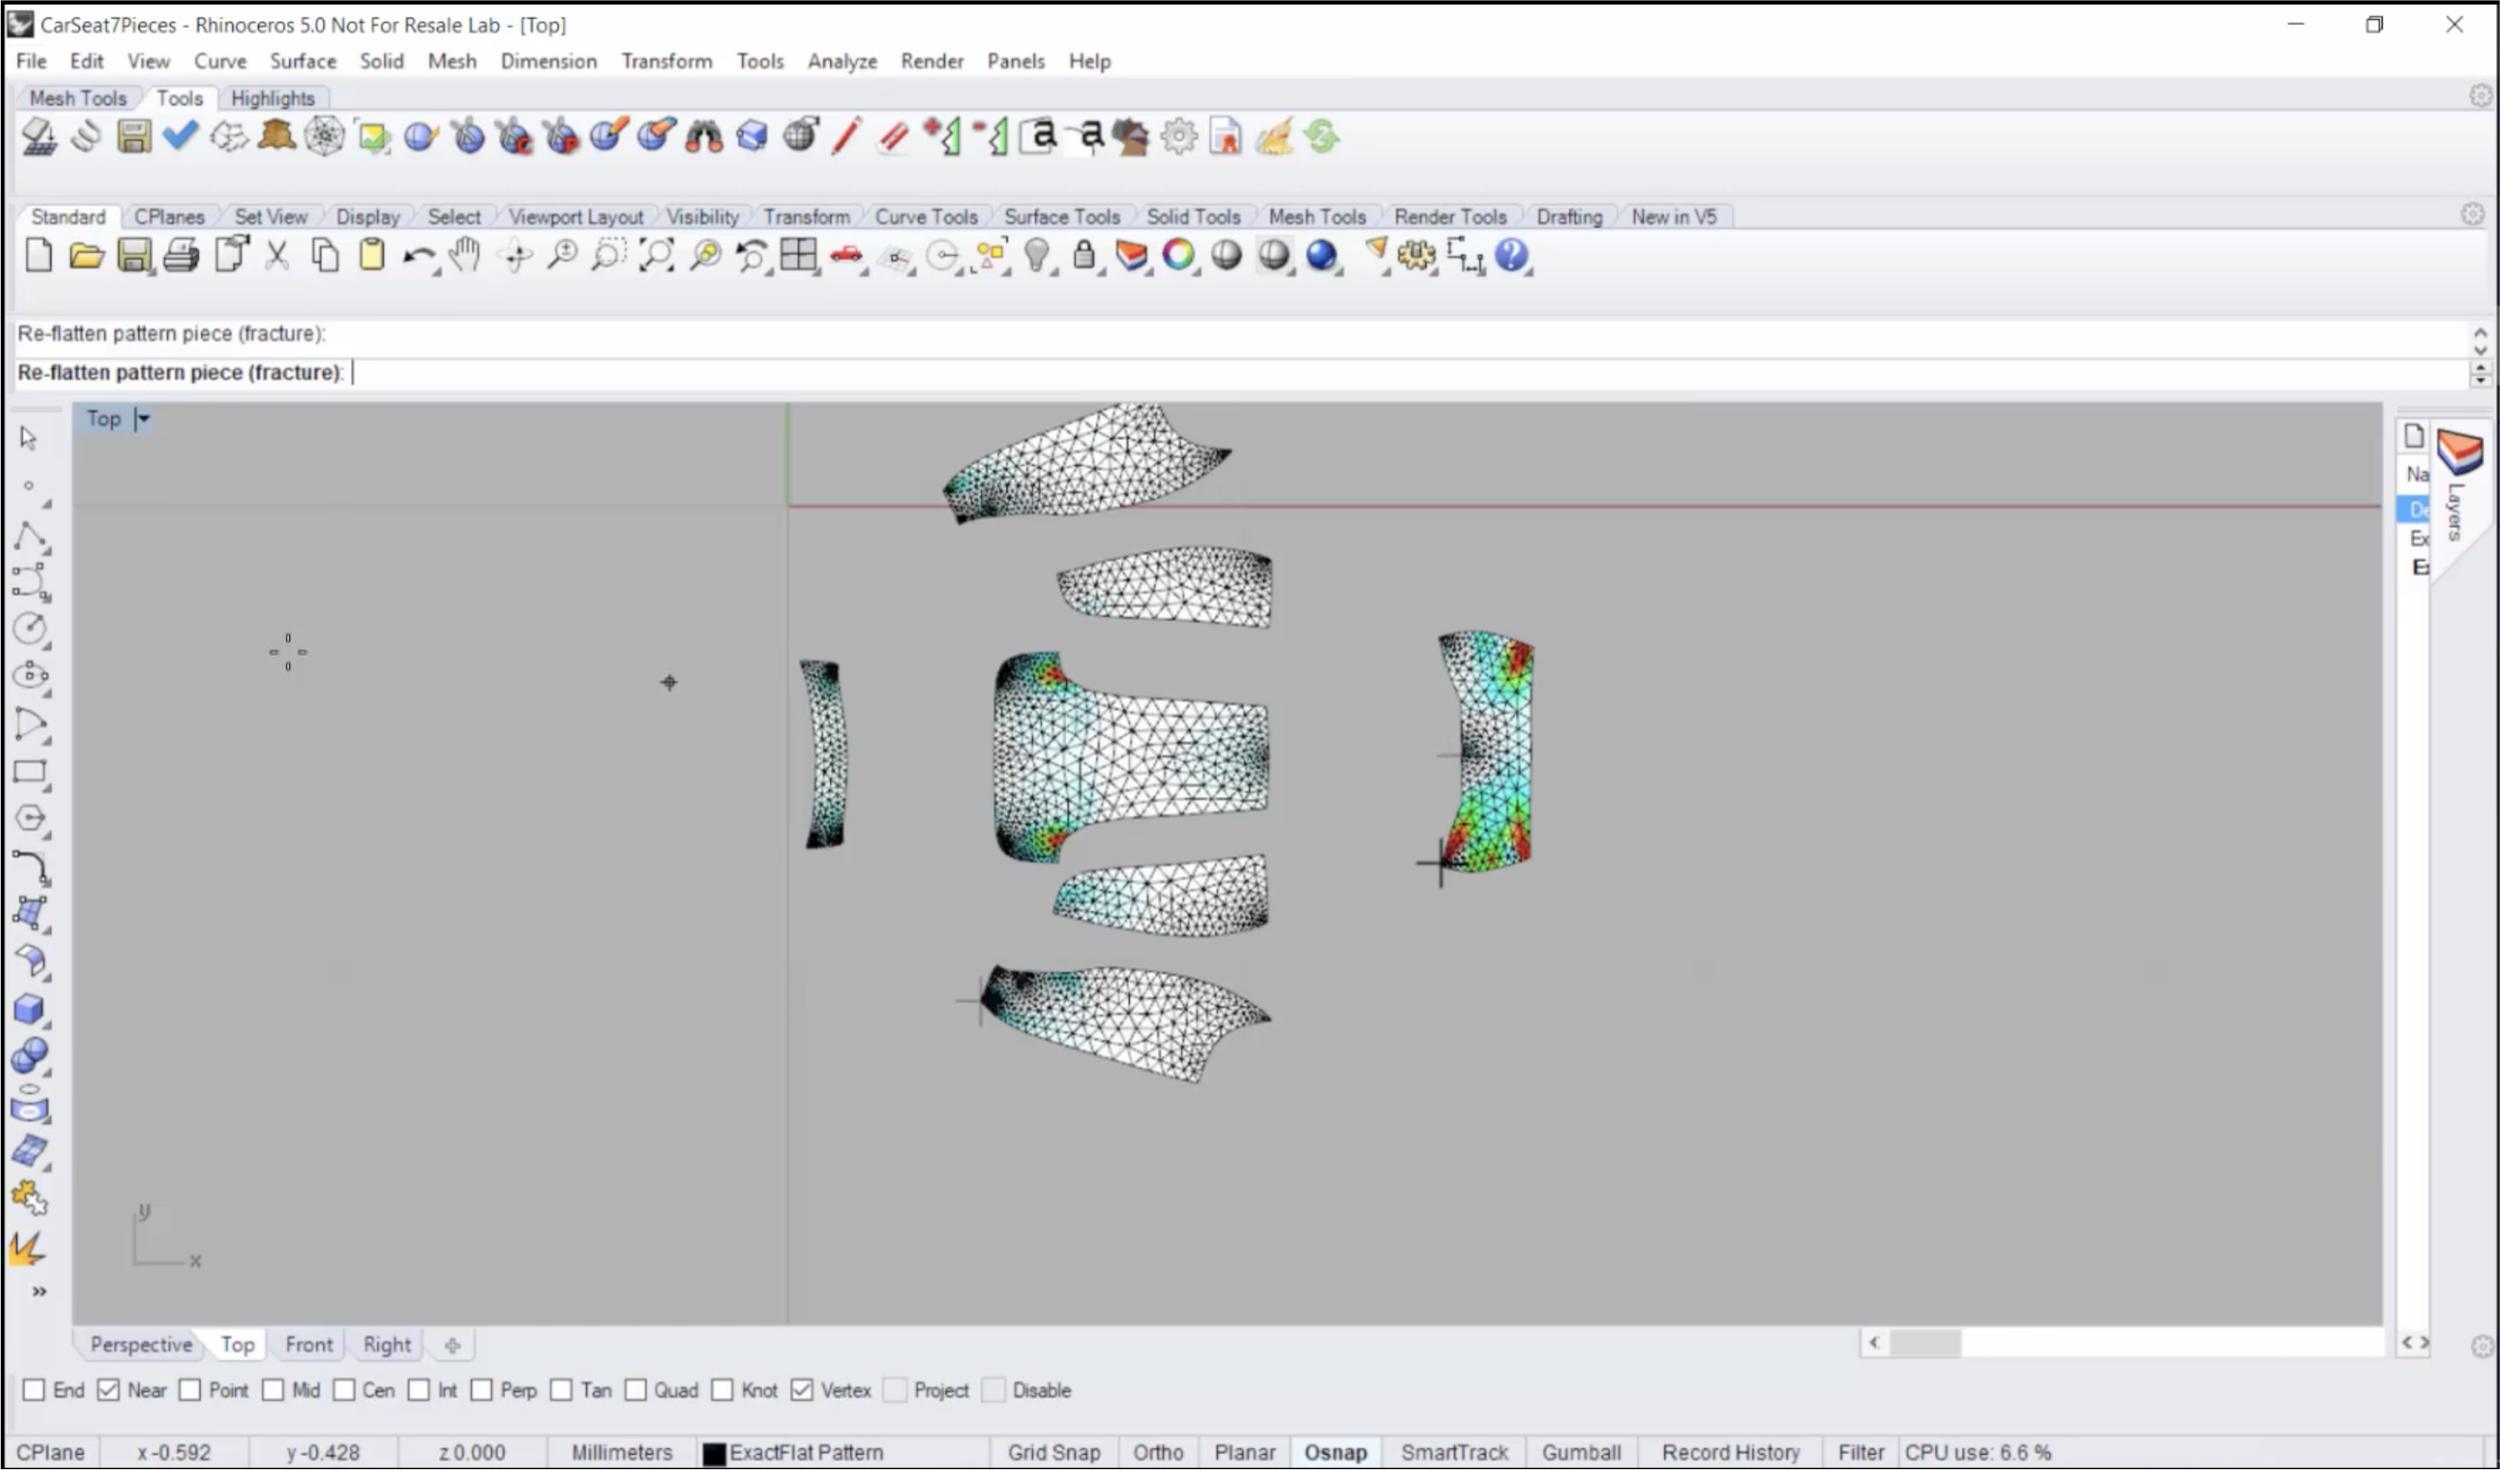 ExactFlat 3D to 2D digital paterning software: The unoptimized flat pattern